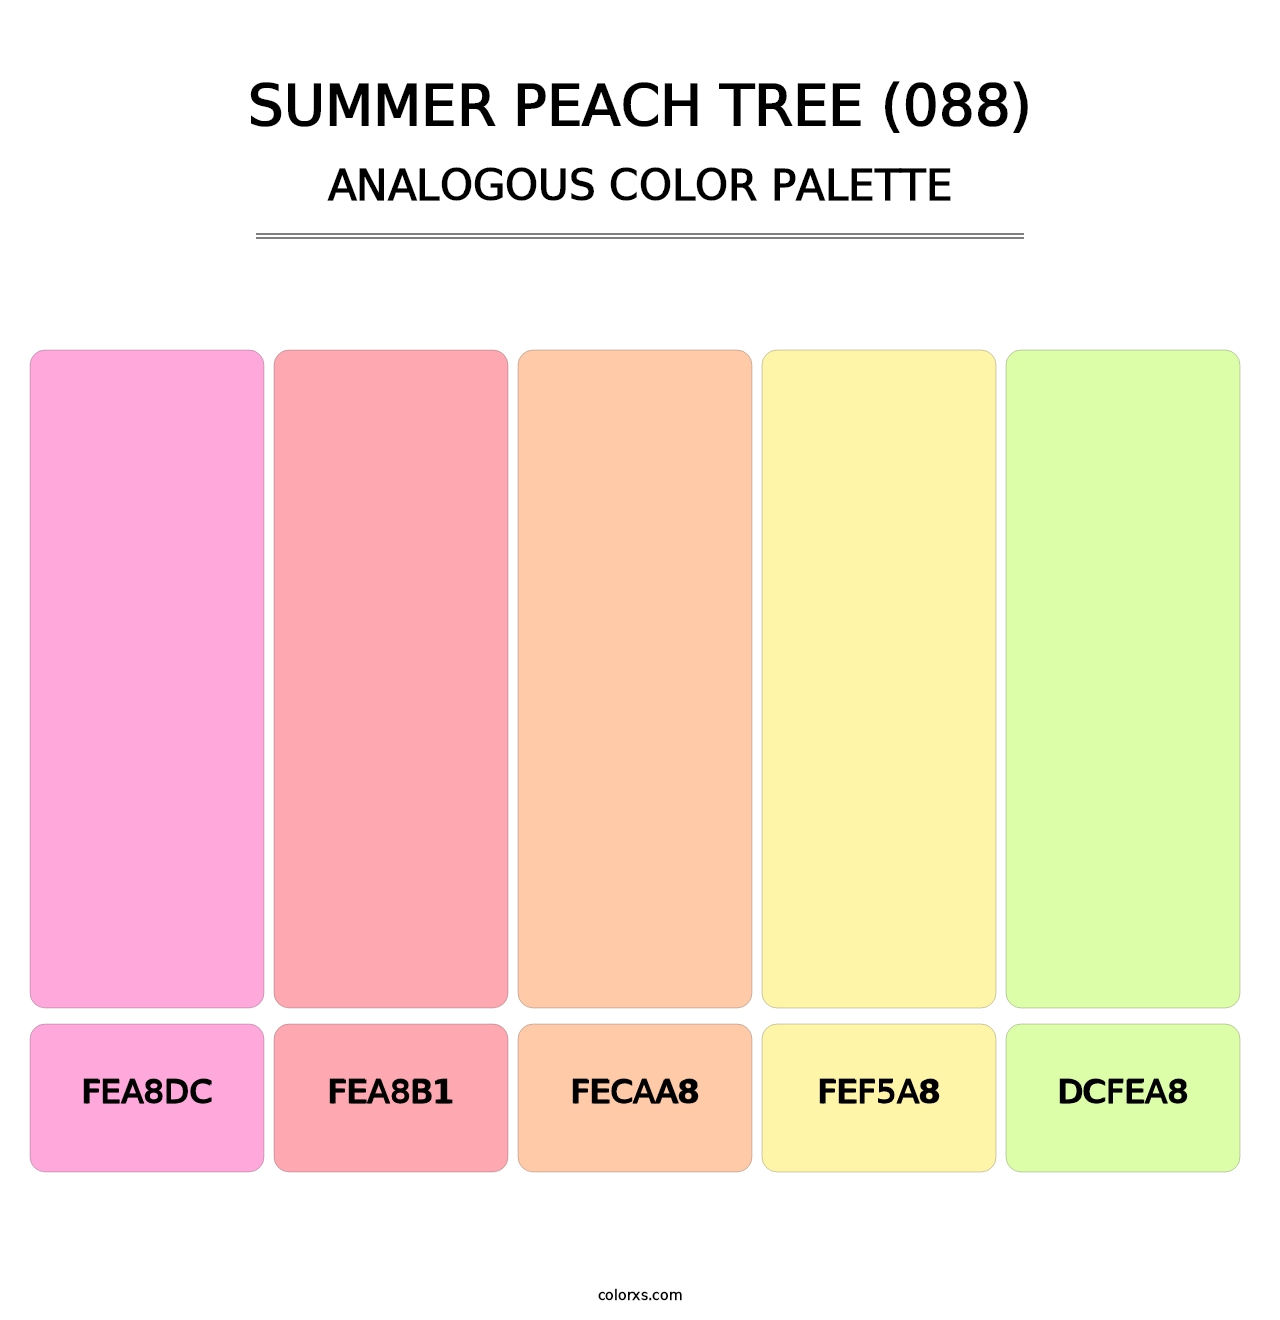 Summer Peach Tree (088) - Analogous Color Palette